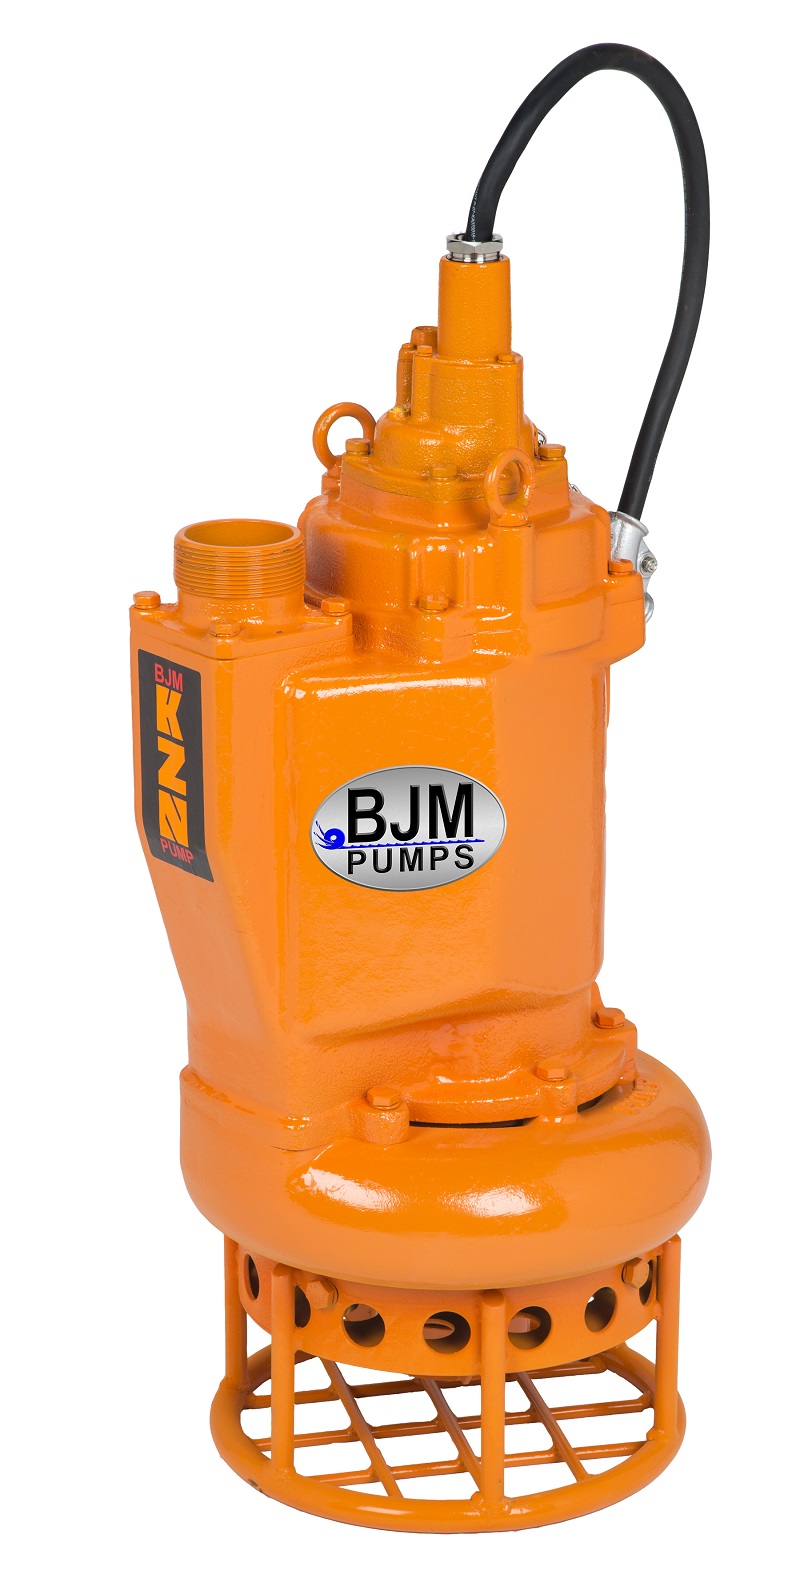 BJM Pumps KZN37 - hard metal submersible slurry pump.